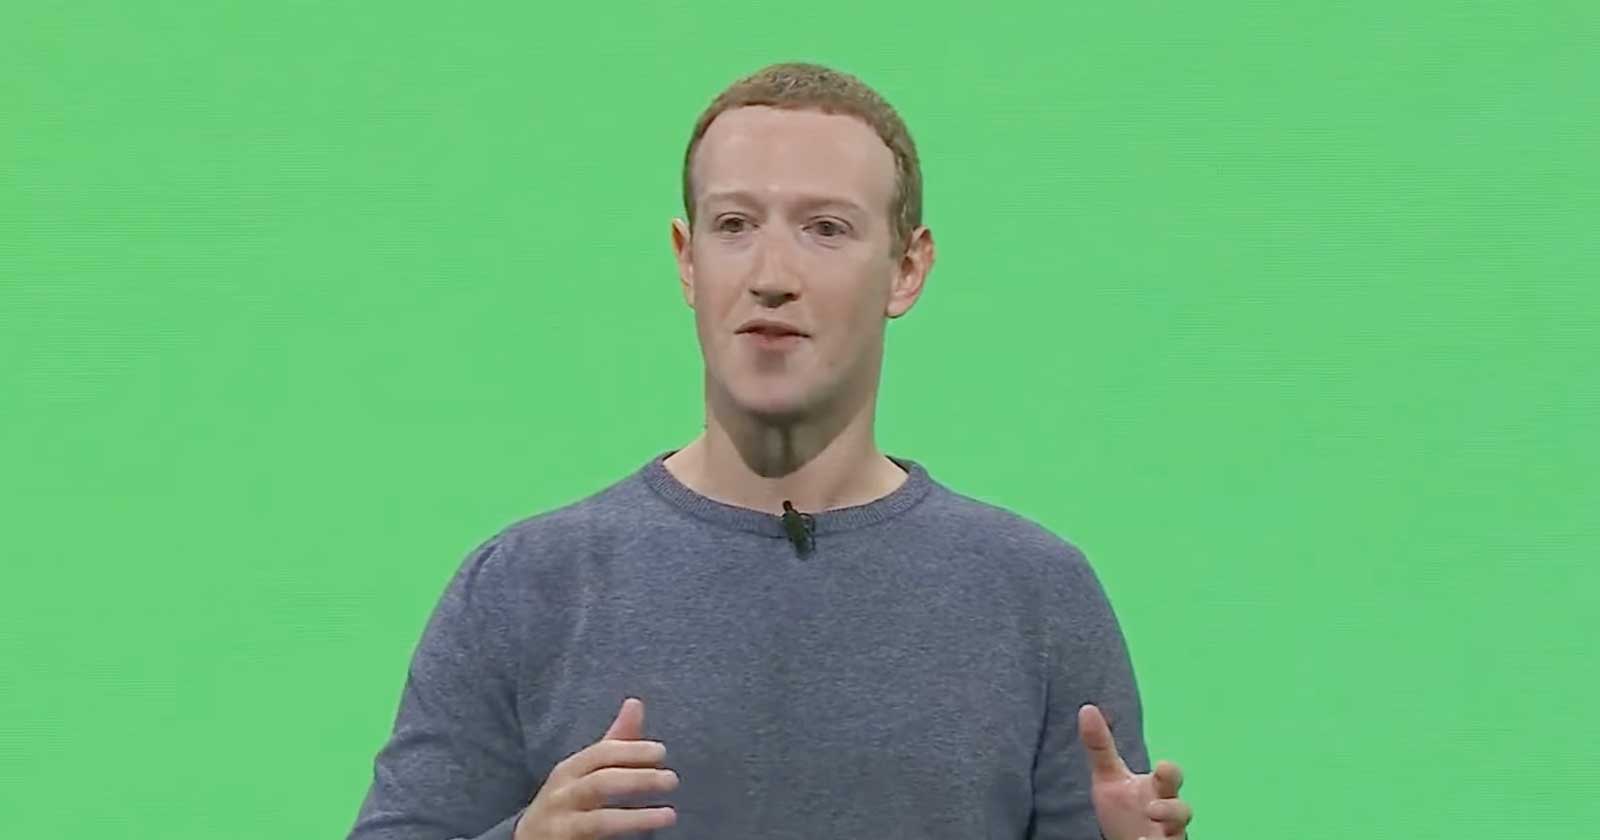 Mark Zuckerberg, CEO of Facebook at F8 Developer Conference 2019